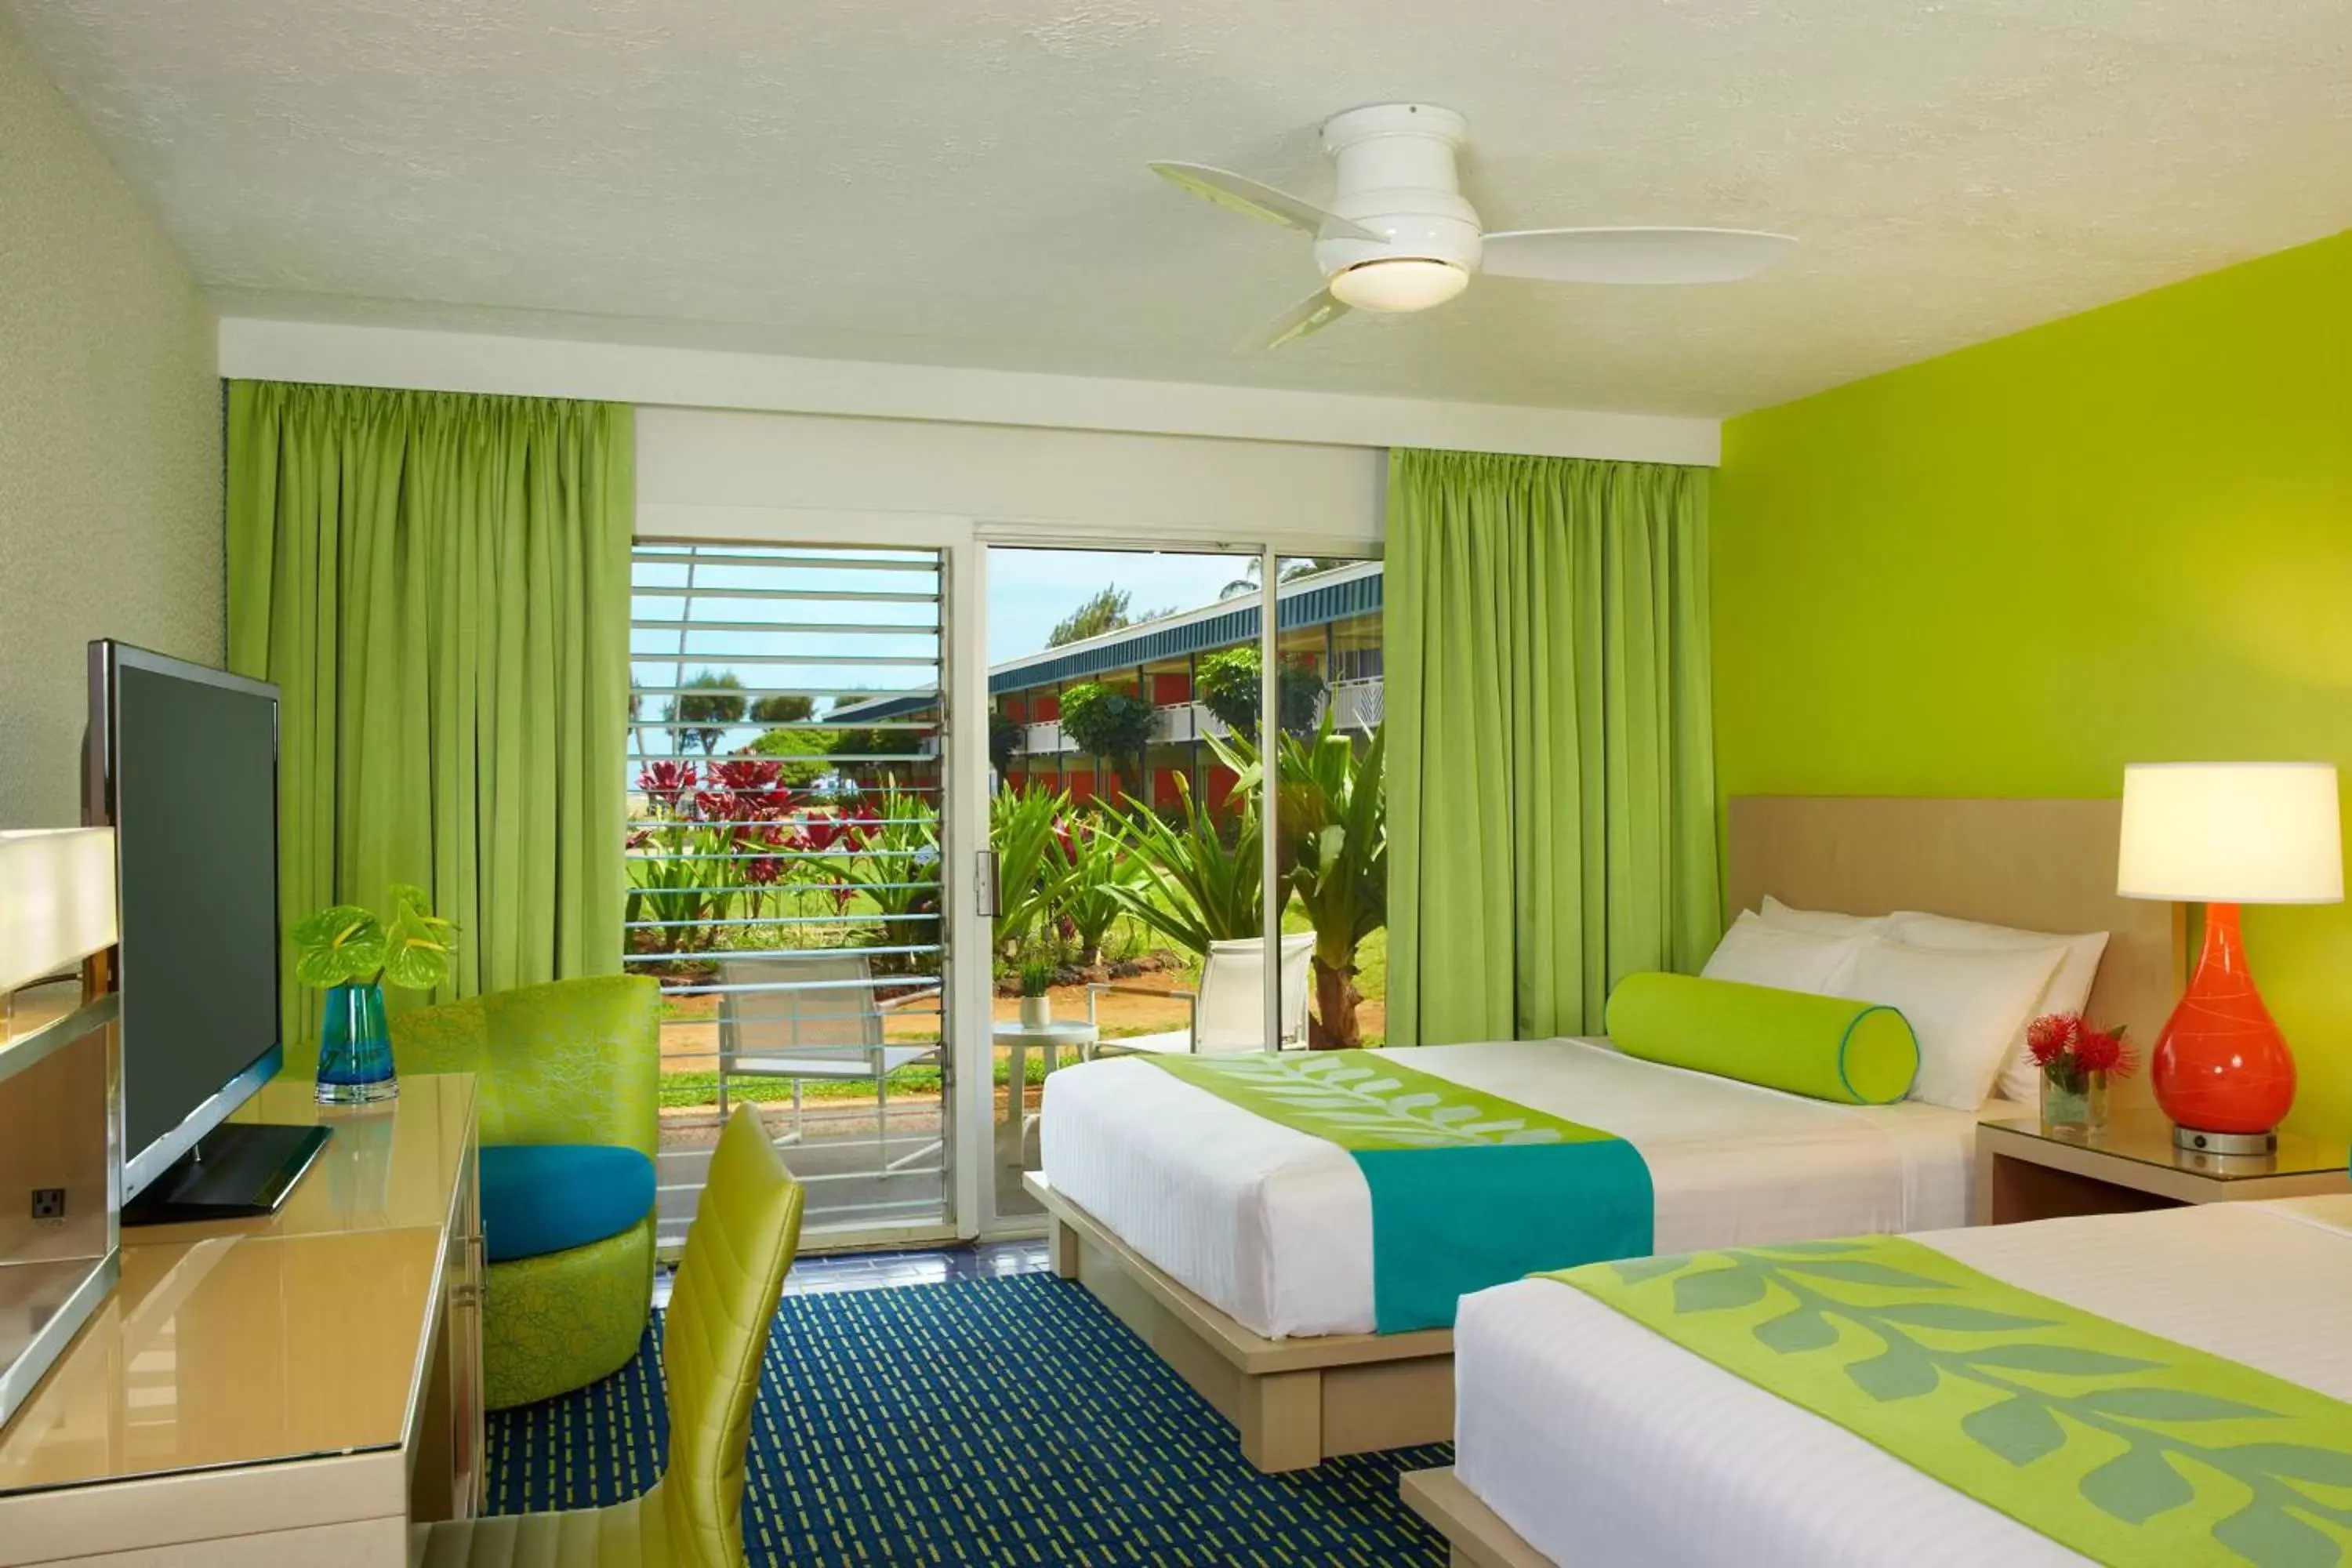 Photo of the whole room in Kauai Shores Hotel